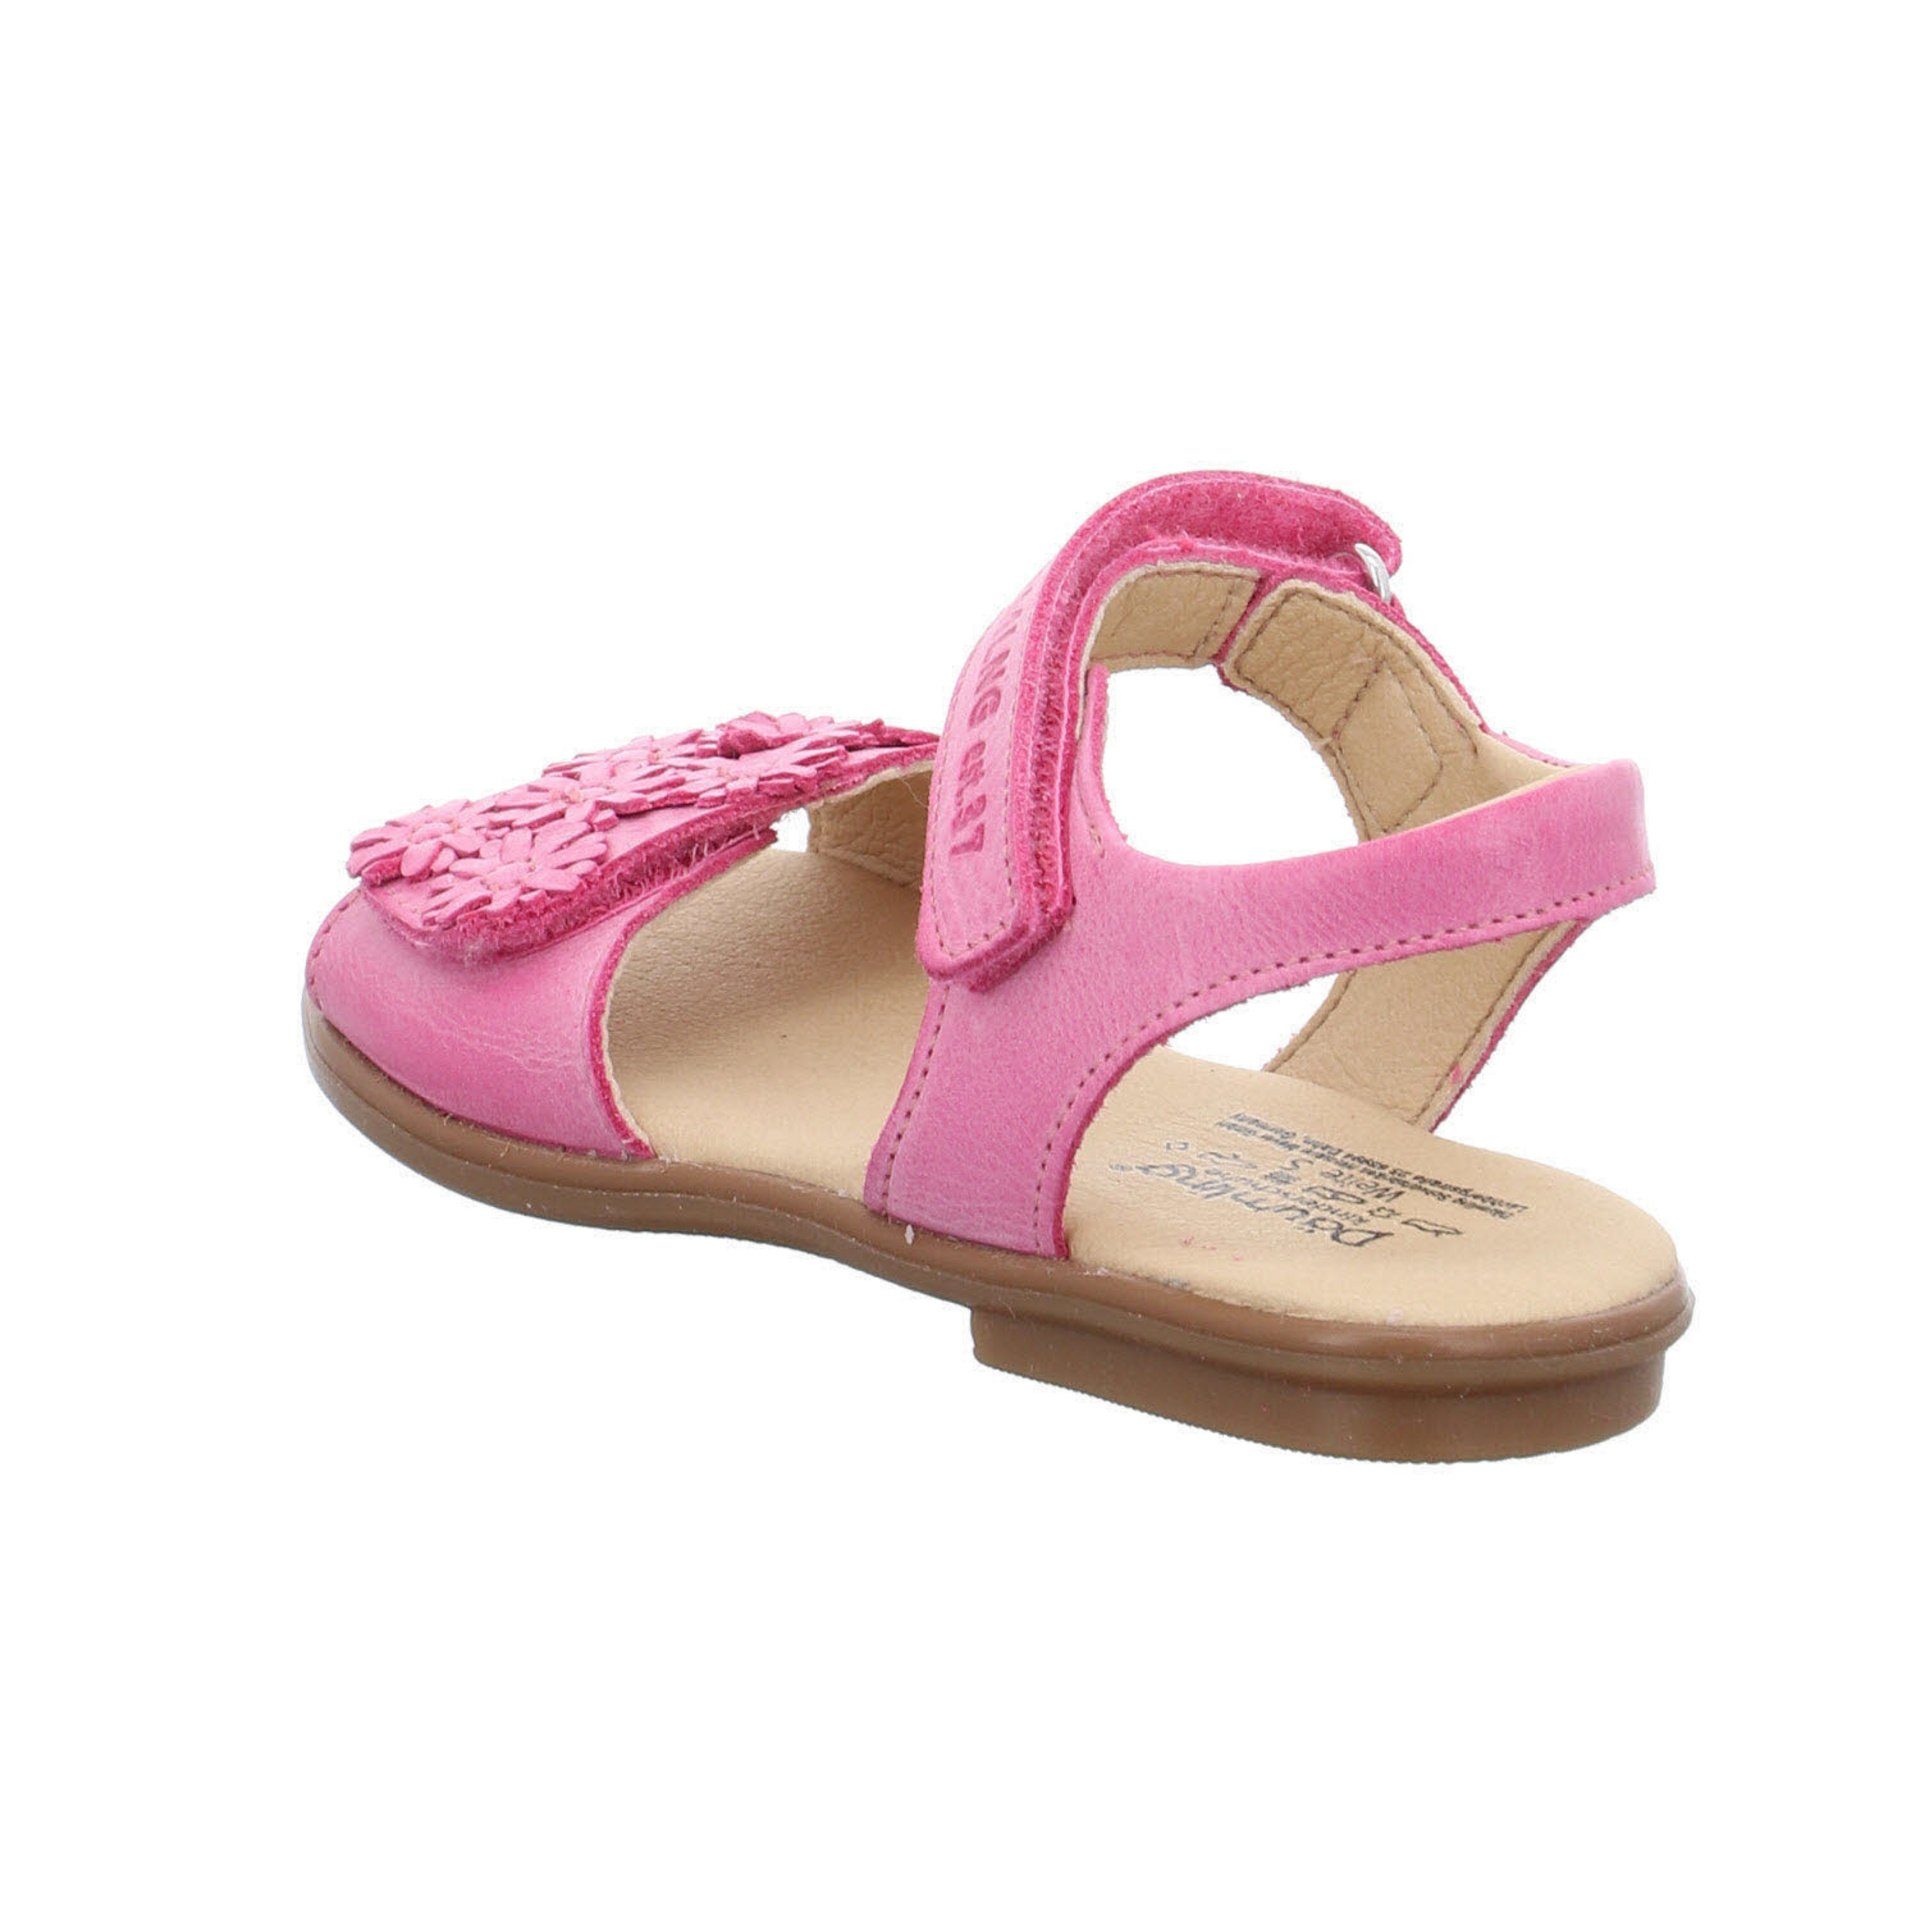 Sandale ciclamino Glattleder Mädchen Sandalen Kinderschuhe Schuhe Raya Däumling (pink) Sandale